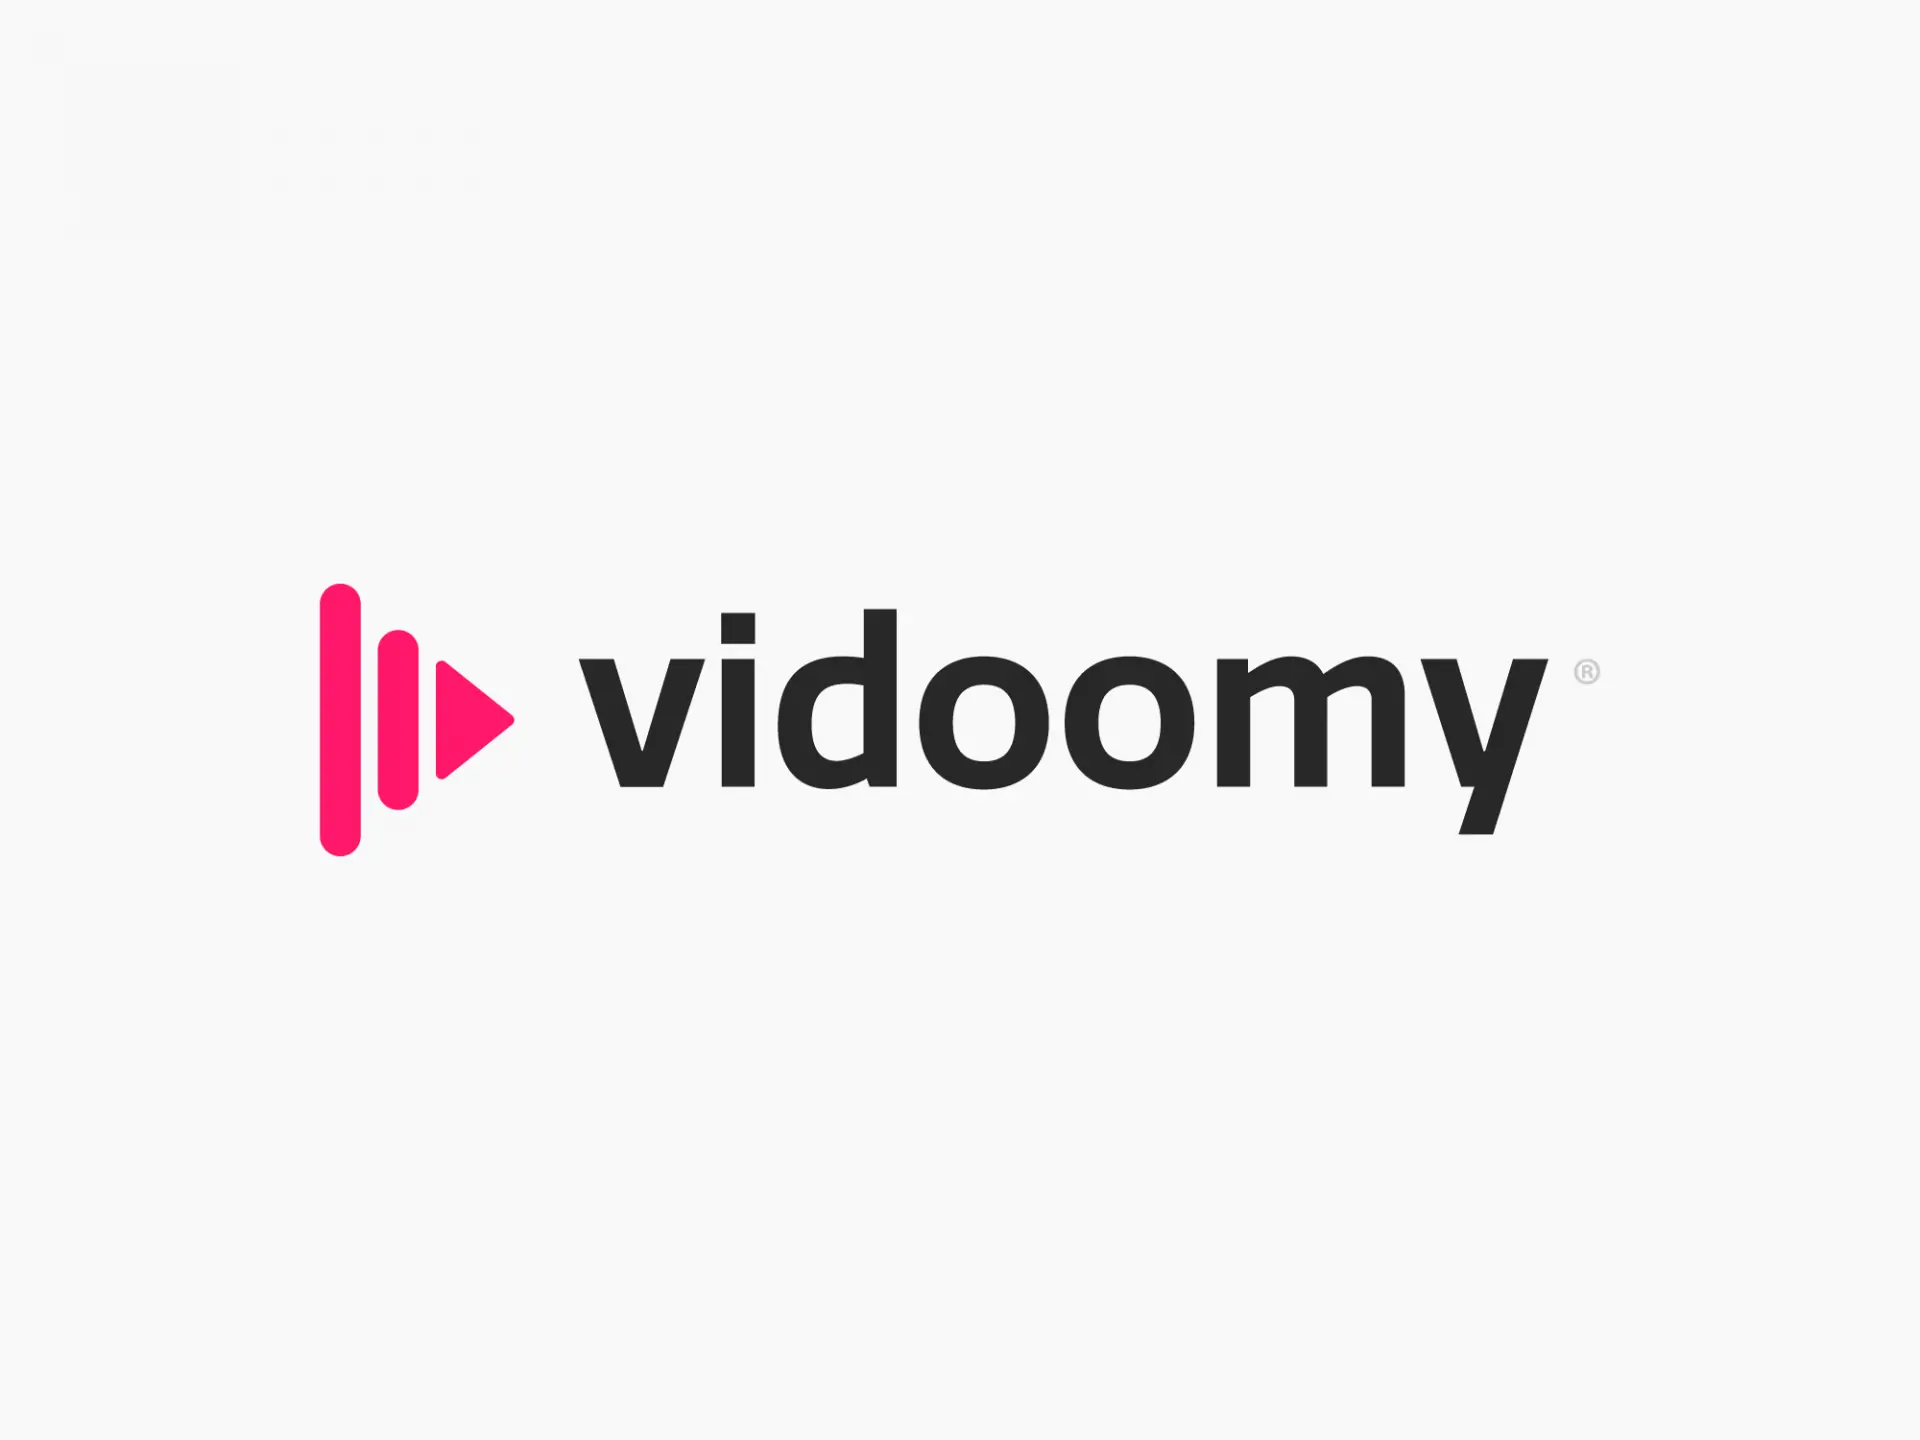 Diseño de logo vidoomy